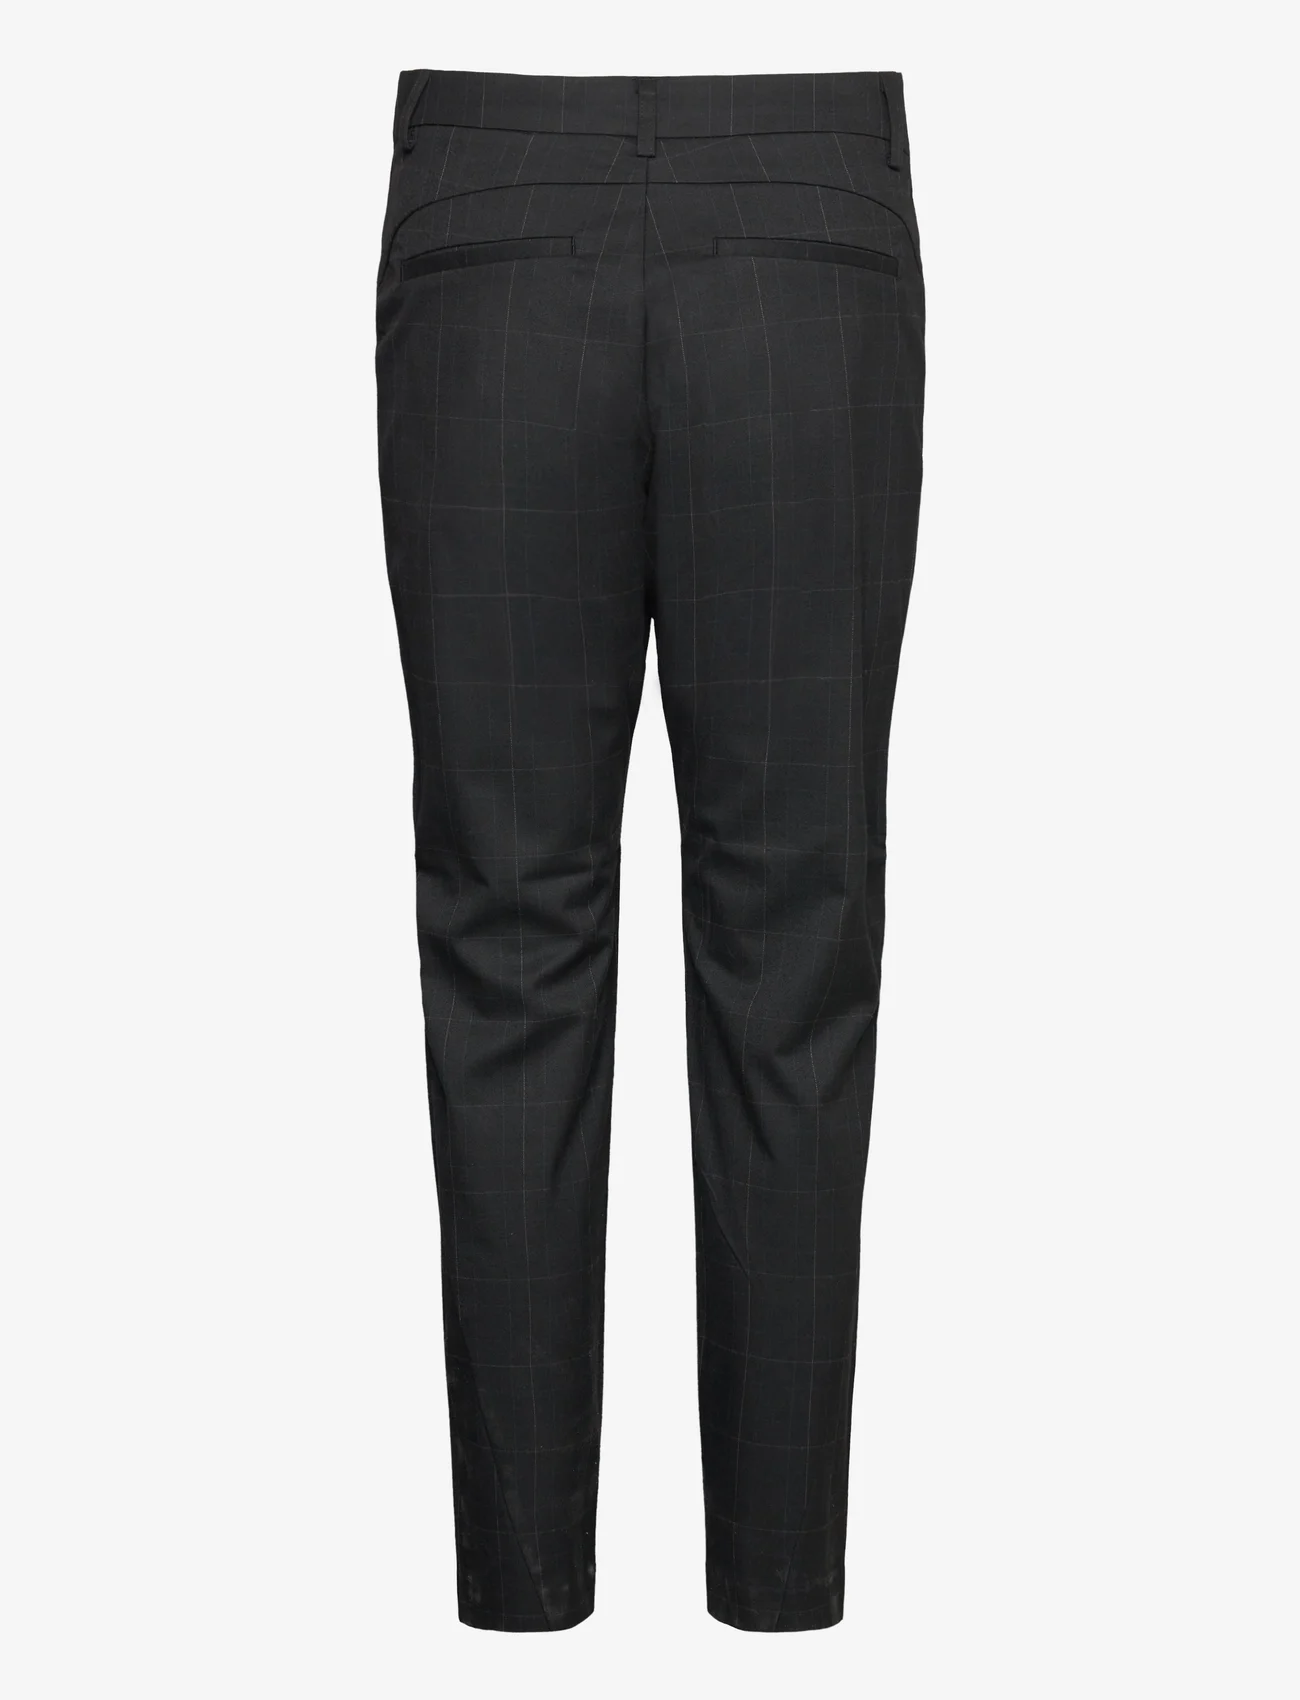 Copenhagen Muse - CMSAVANNA-PA-RIBBON-BLACK - slim fit trousers - black - 1